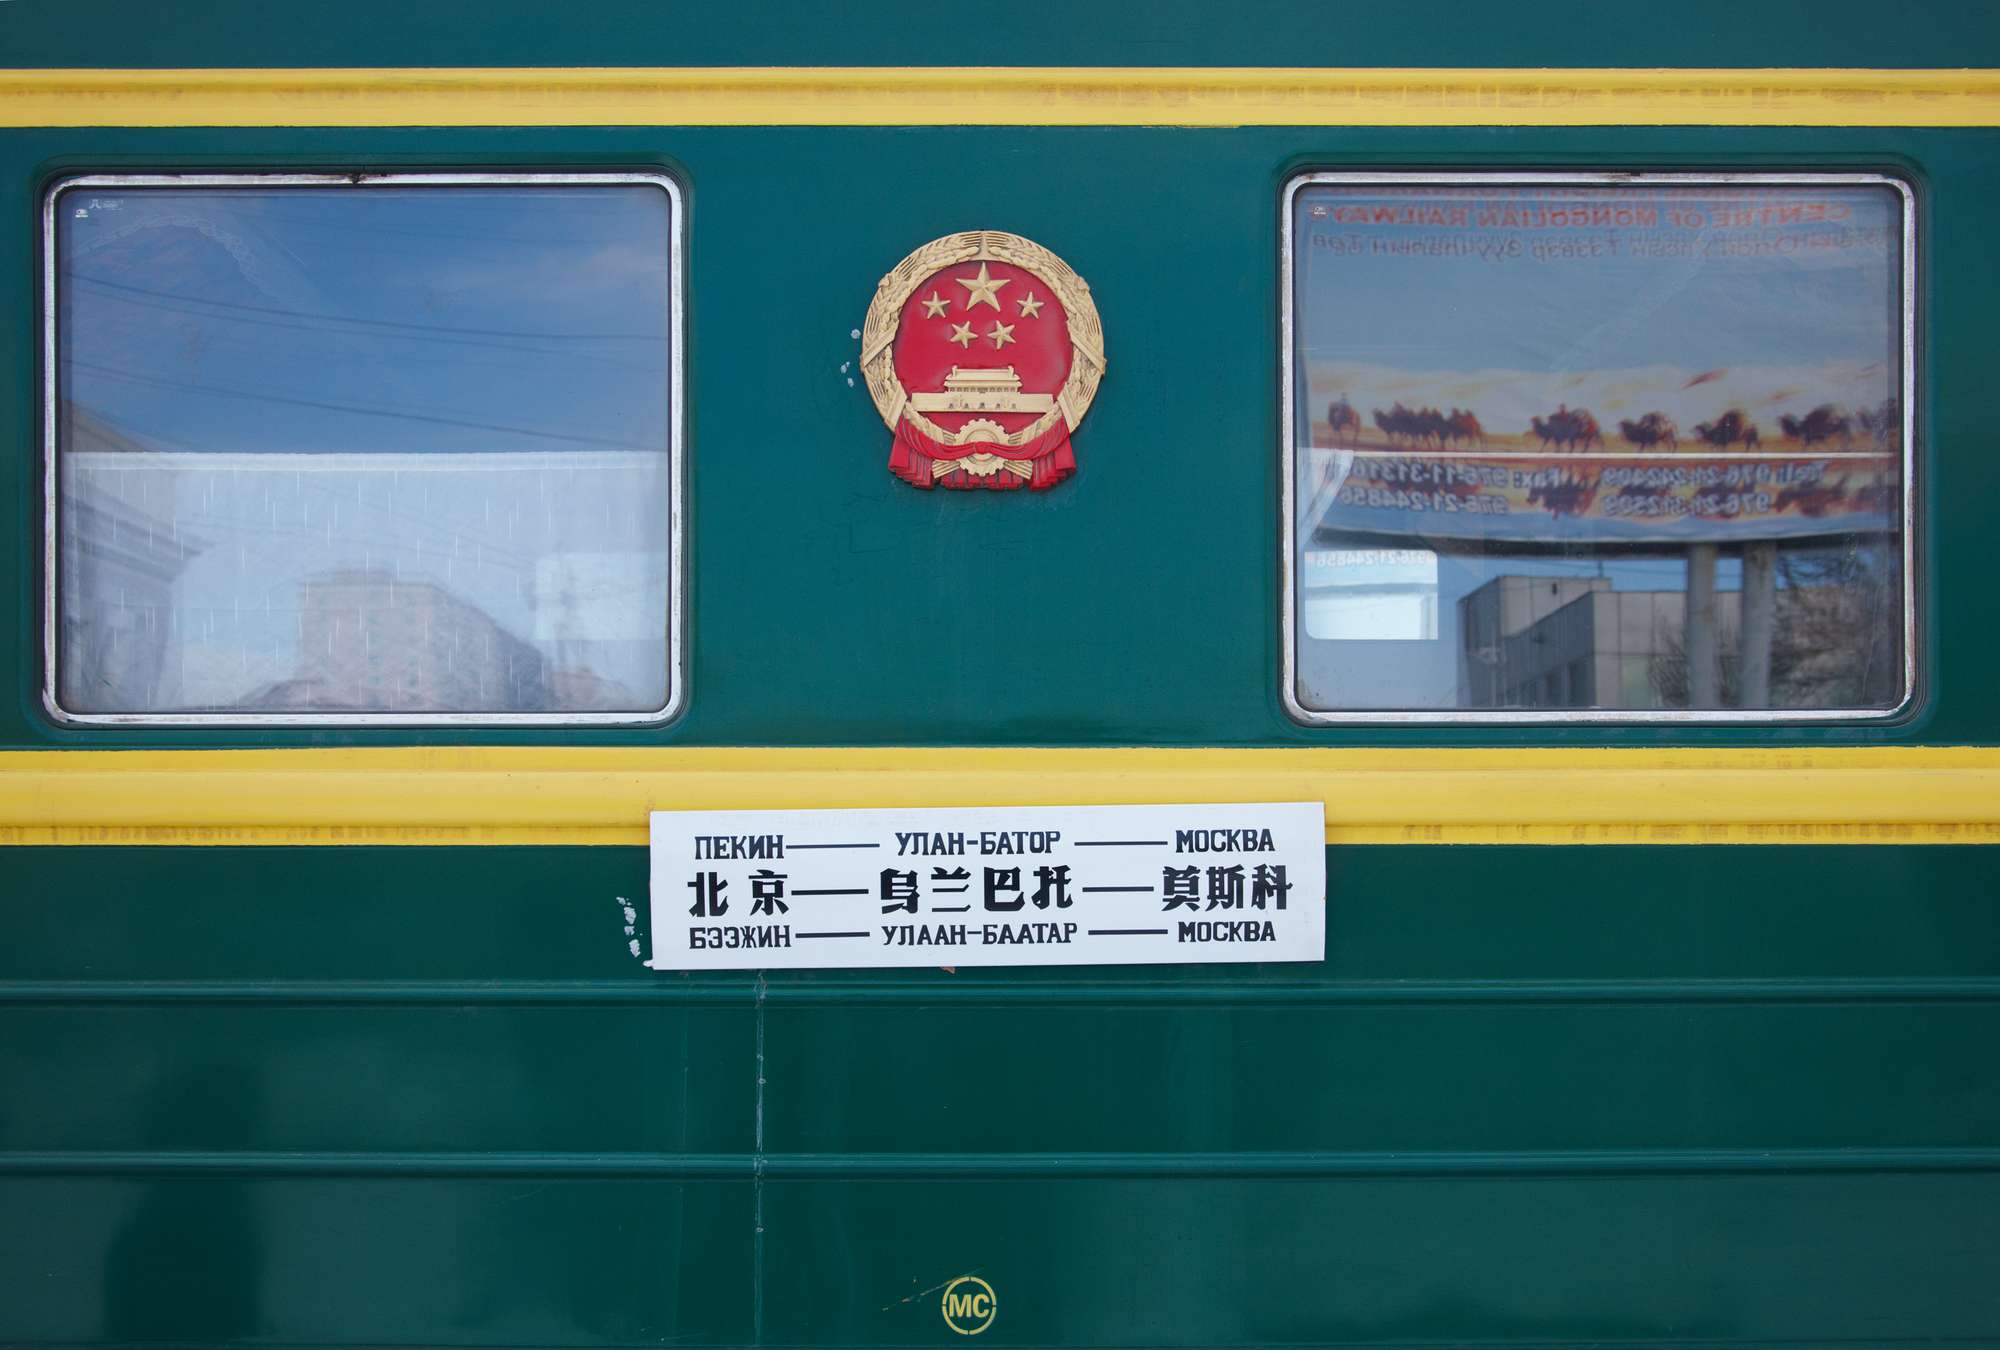             Wagon Green - fotobehang spoorwegnostalgie
        